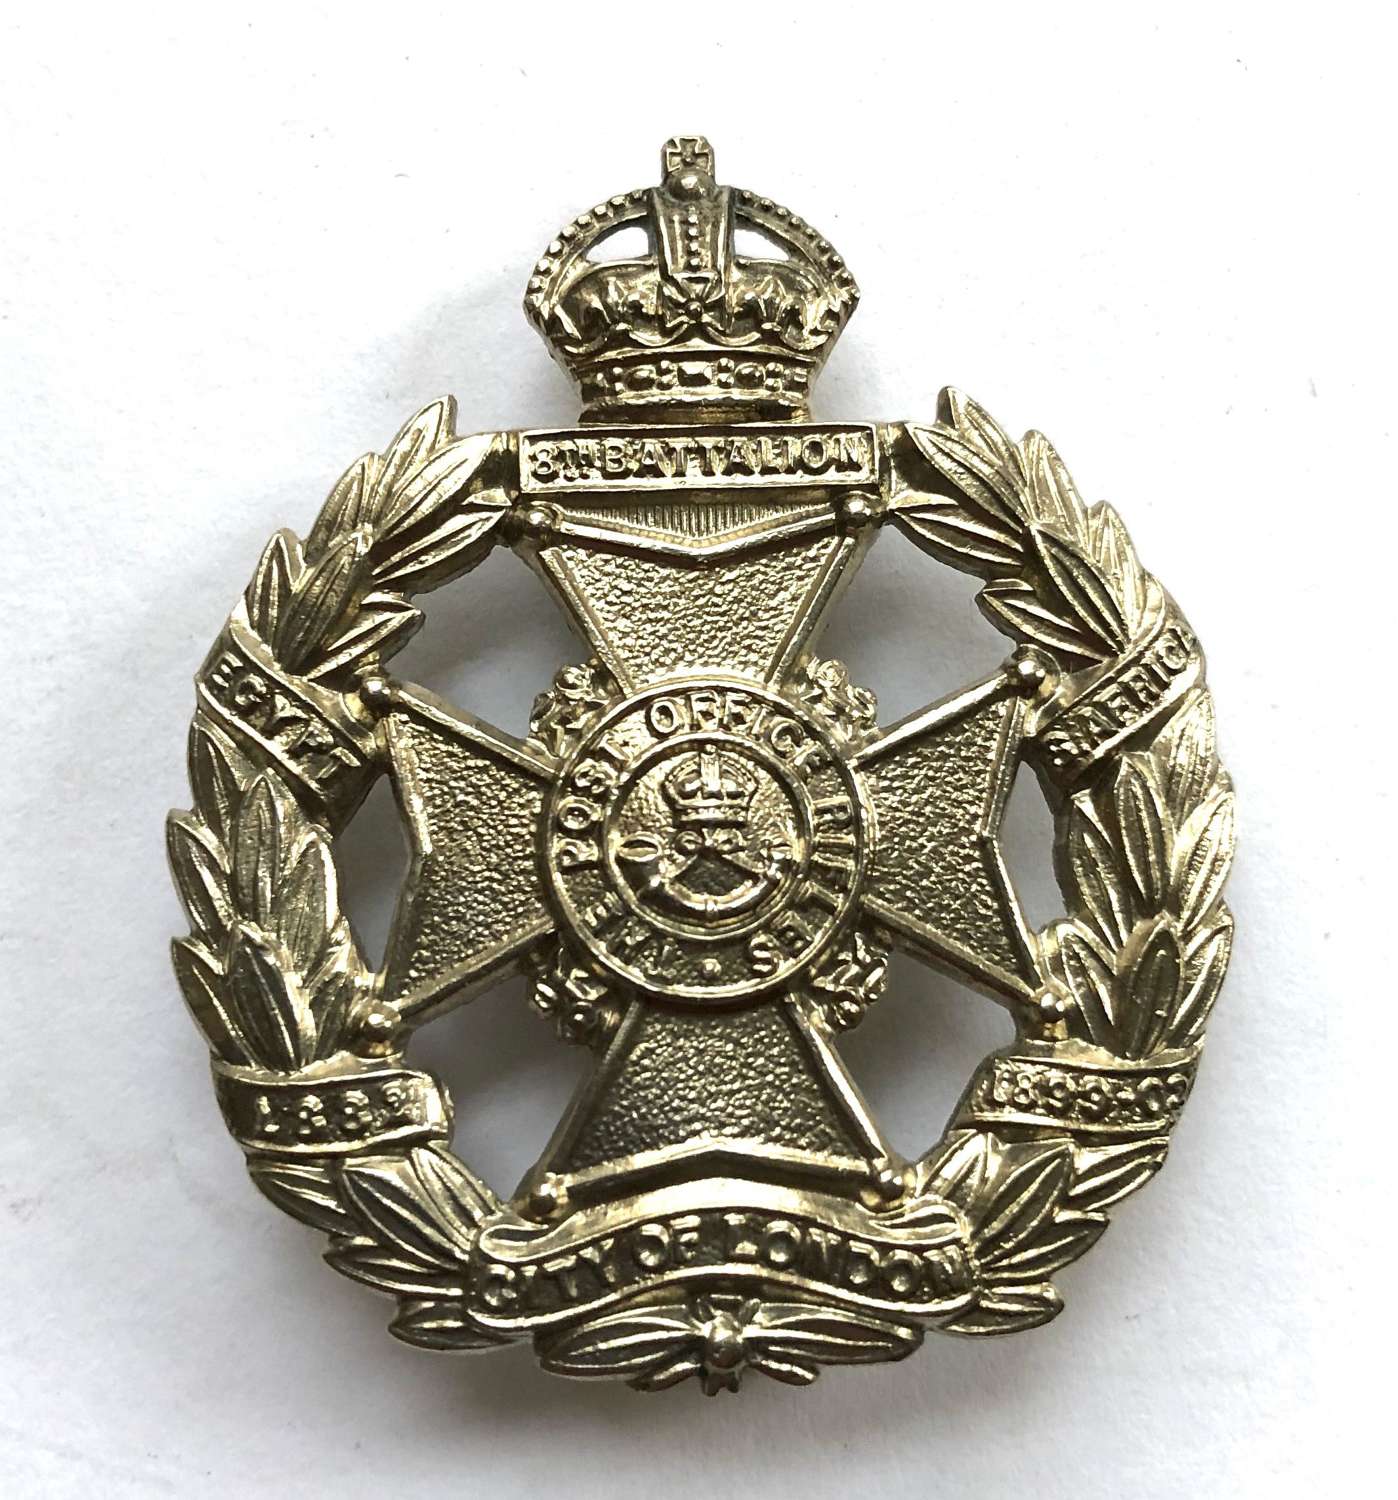 8th London (Post Office Rifles) cap badge 1908-22